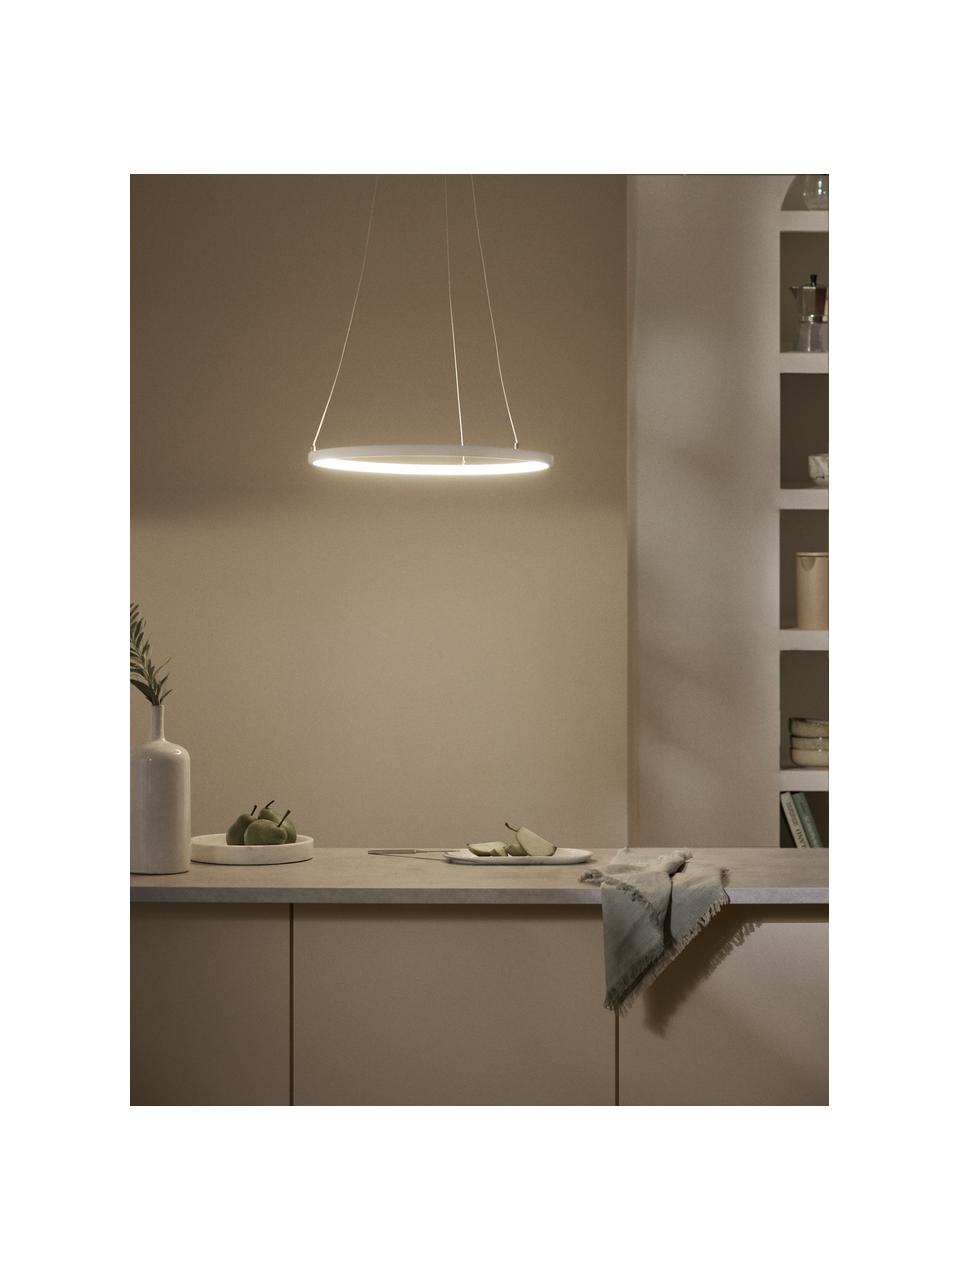 Suspension LED Breda, Blanc, Ø 50 cm